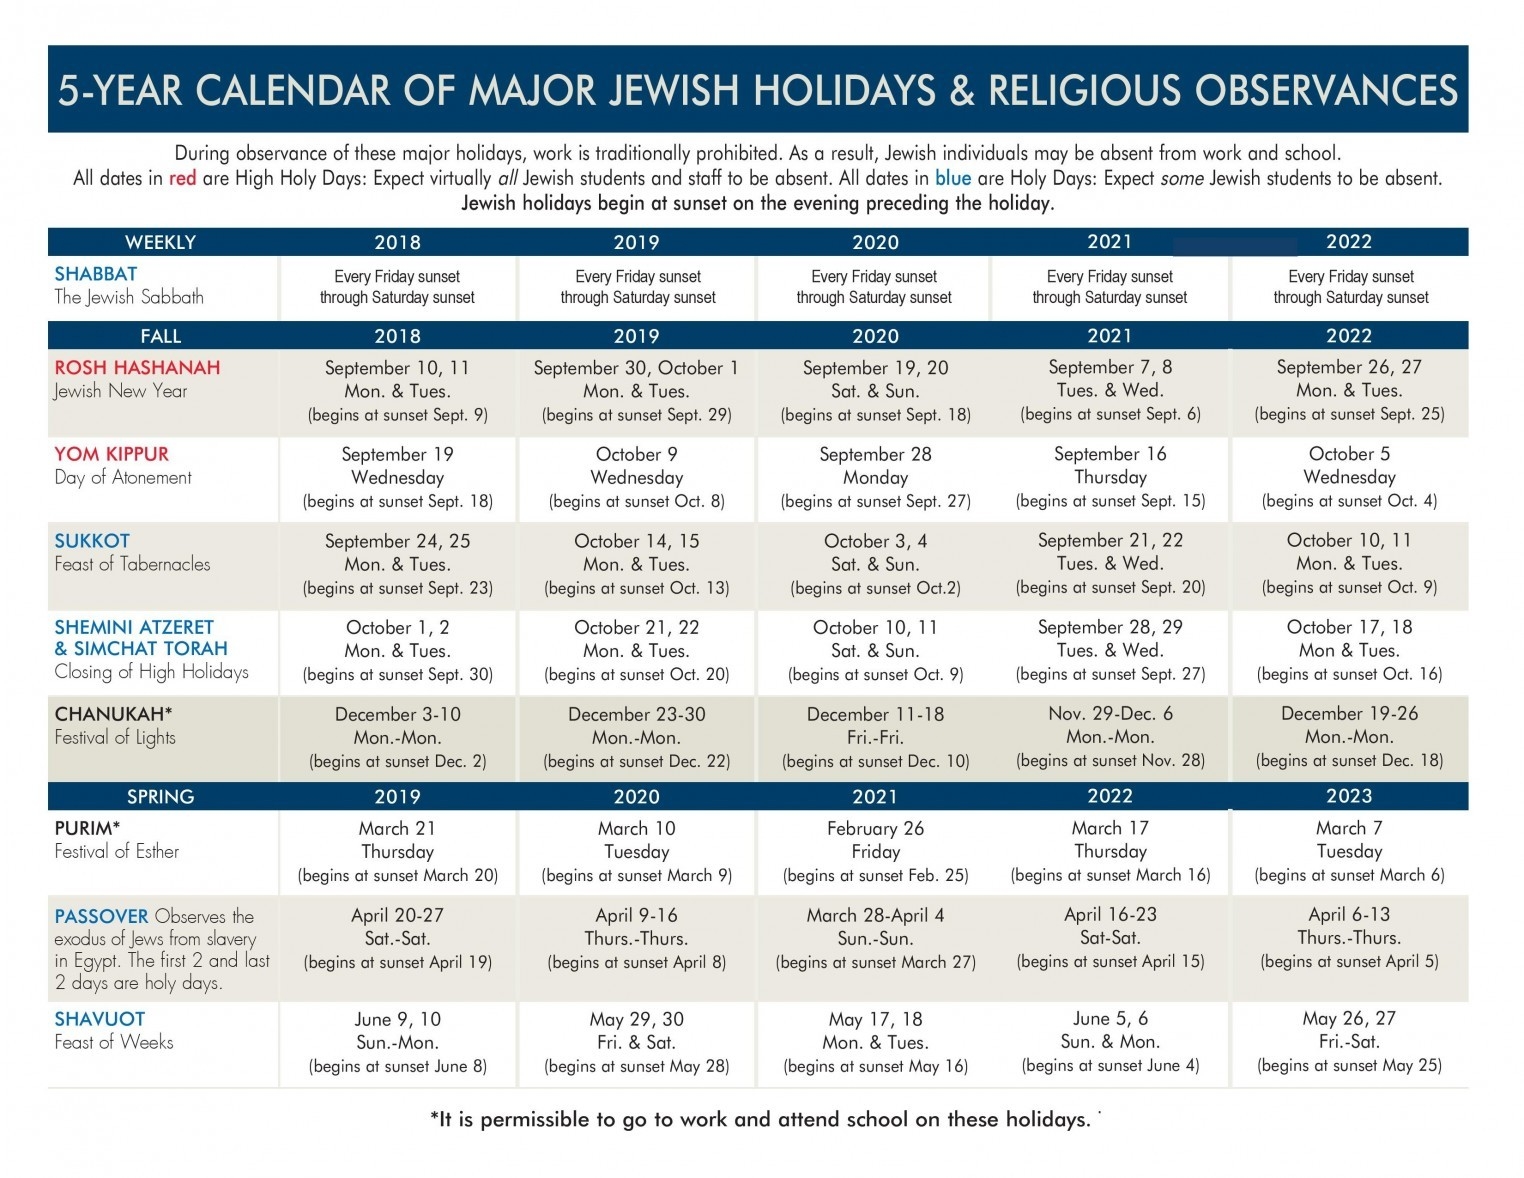 5-Year Jewish Holiday Calendar | Jewish Federation Of-Calendar Of 2020 Jewish Holidays